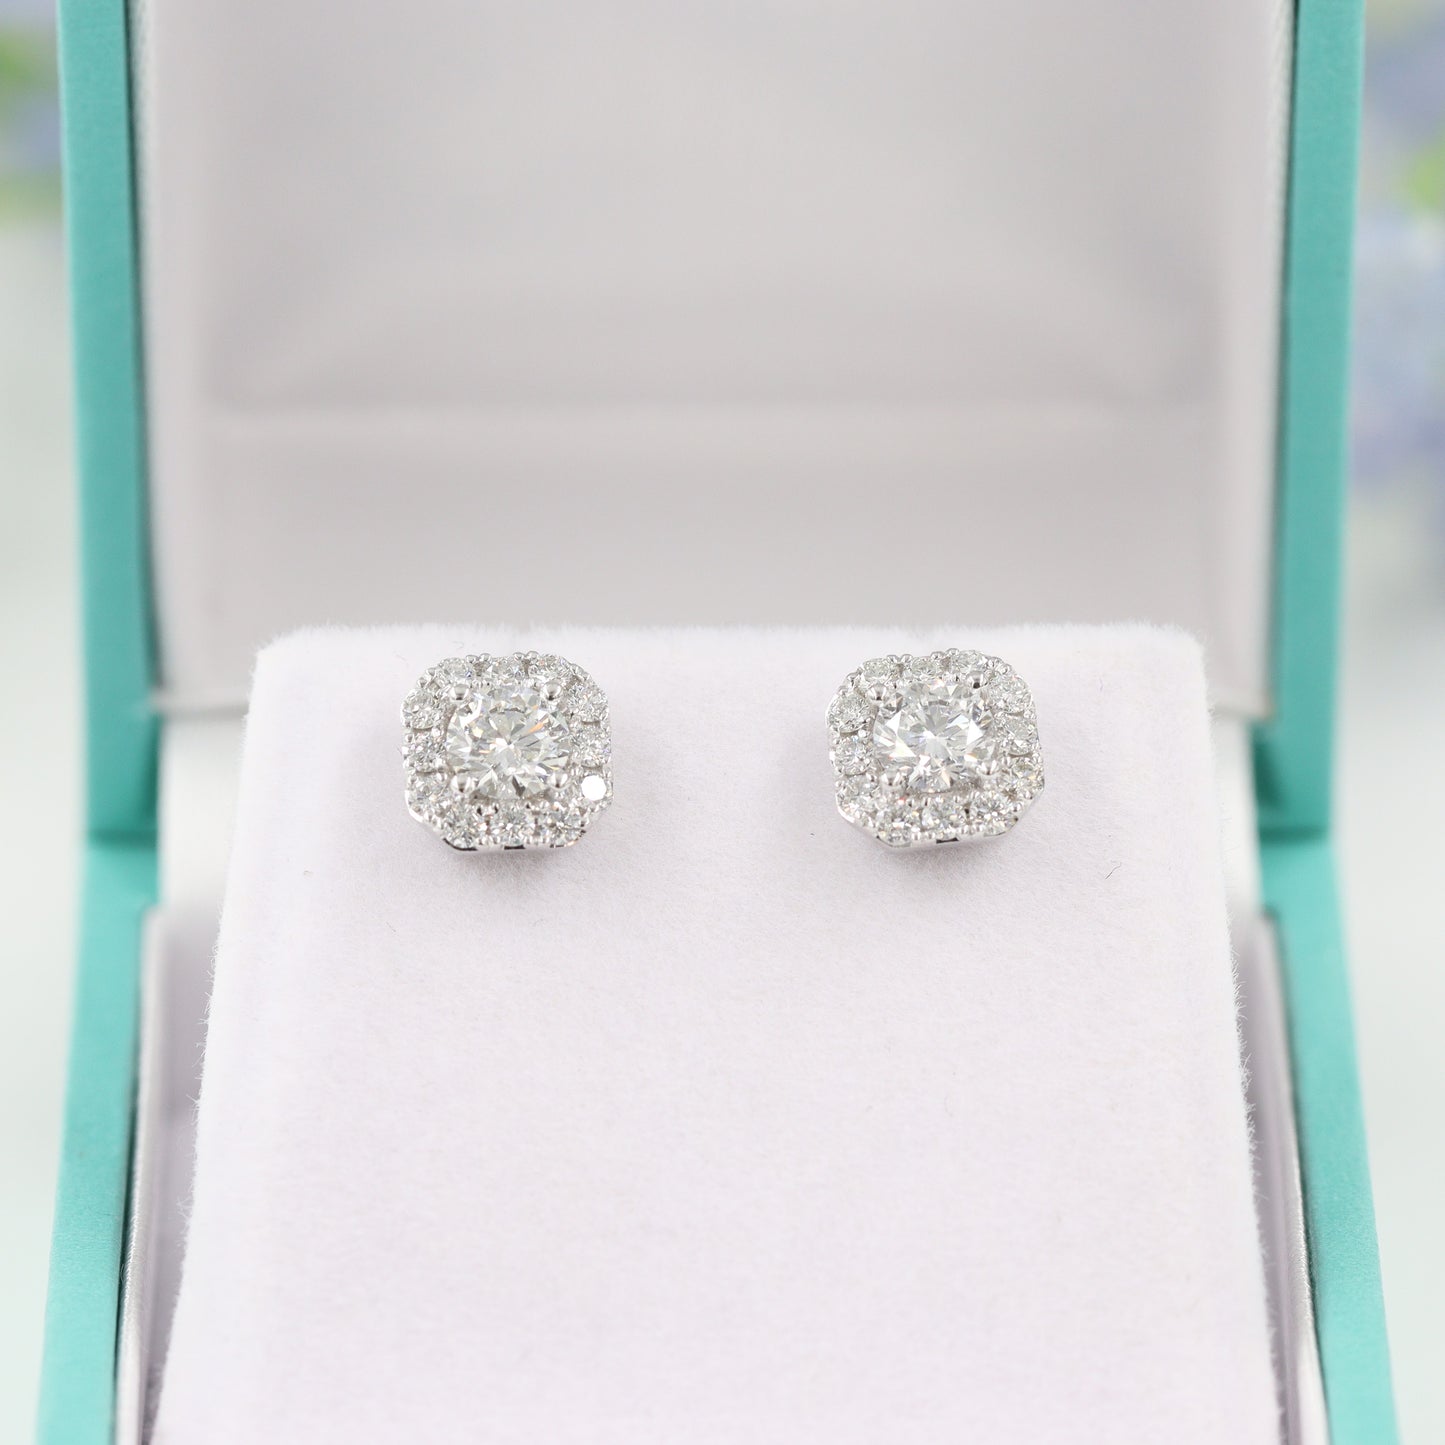 1ct Diamond Men's Stud Earrings/Halo Earrings/Natural Diamond Earrings/14K 18K Gold Diamond Women's & Men's Stud Earrings/Anniversary gift